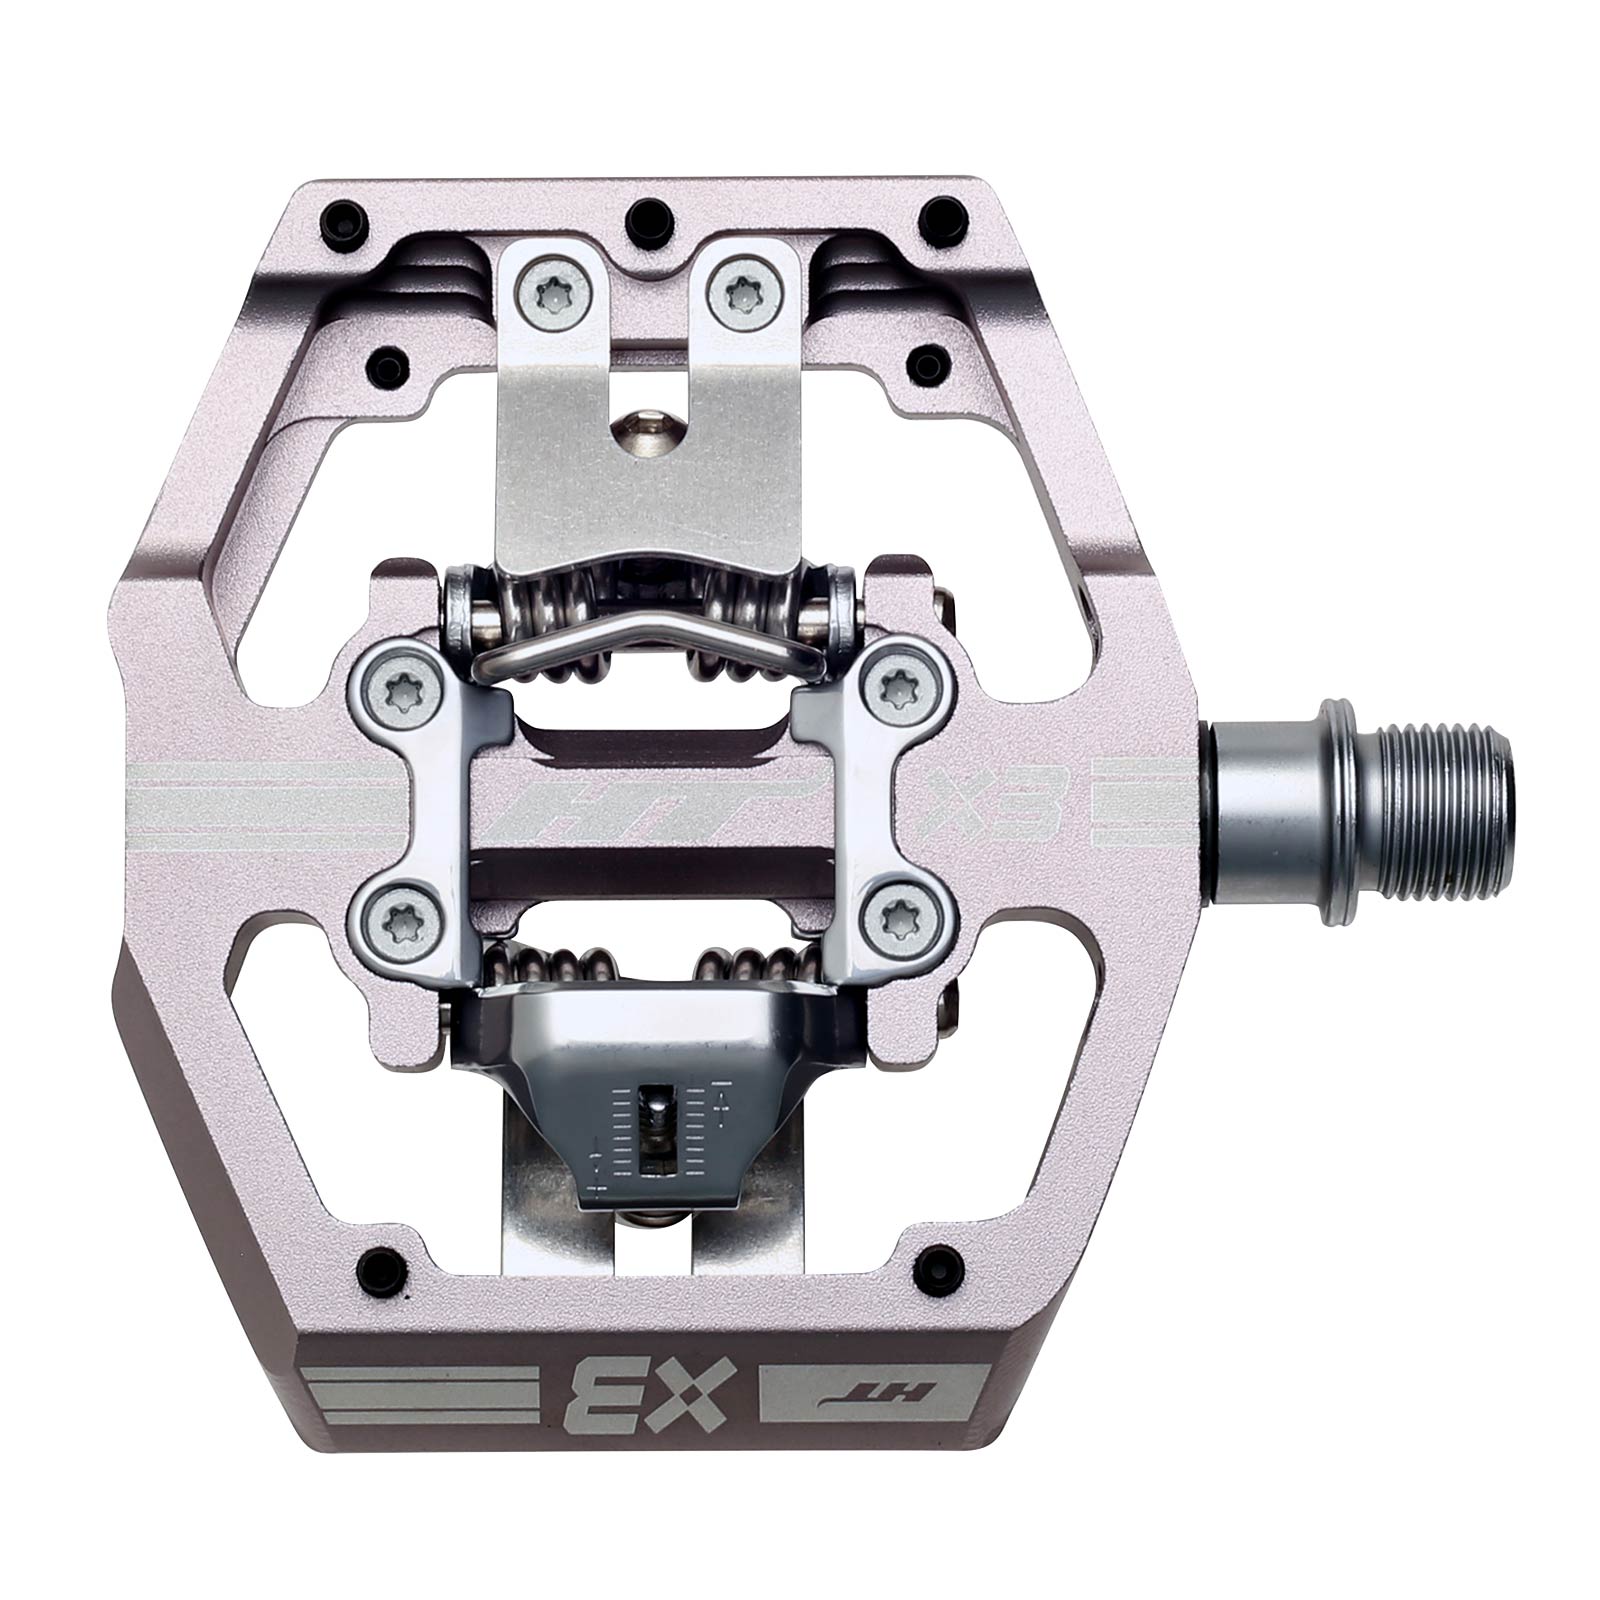 Ht X3 Pedals Alloy / CNC CRMO - Grey